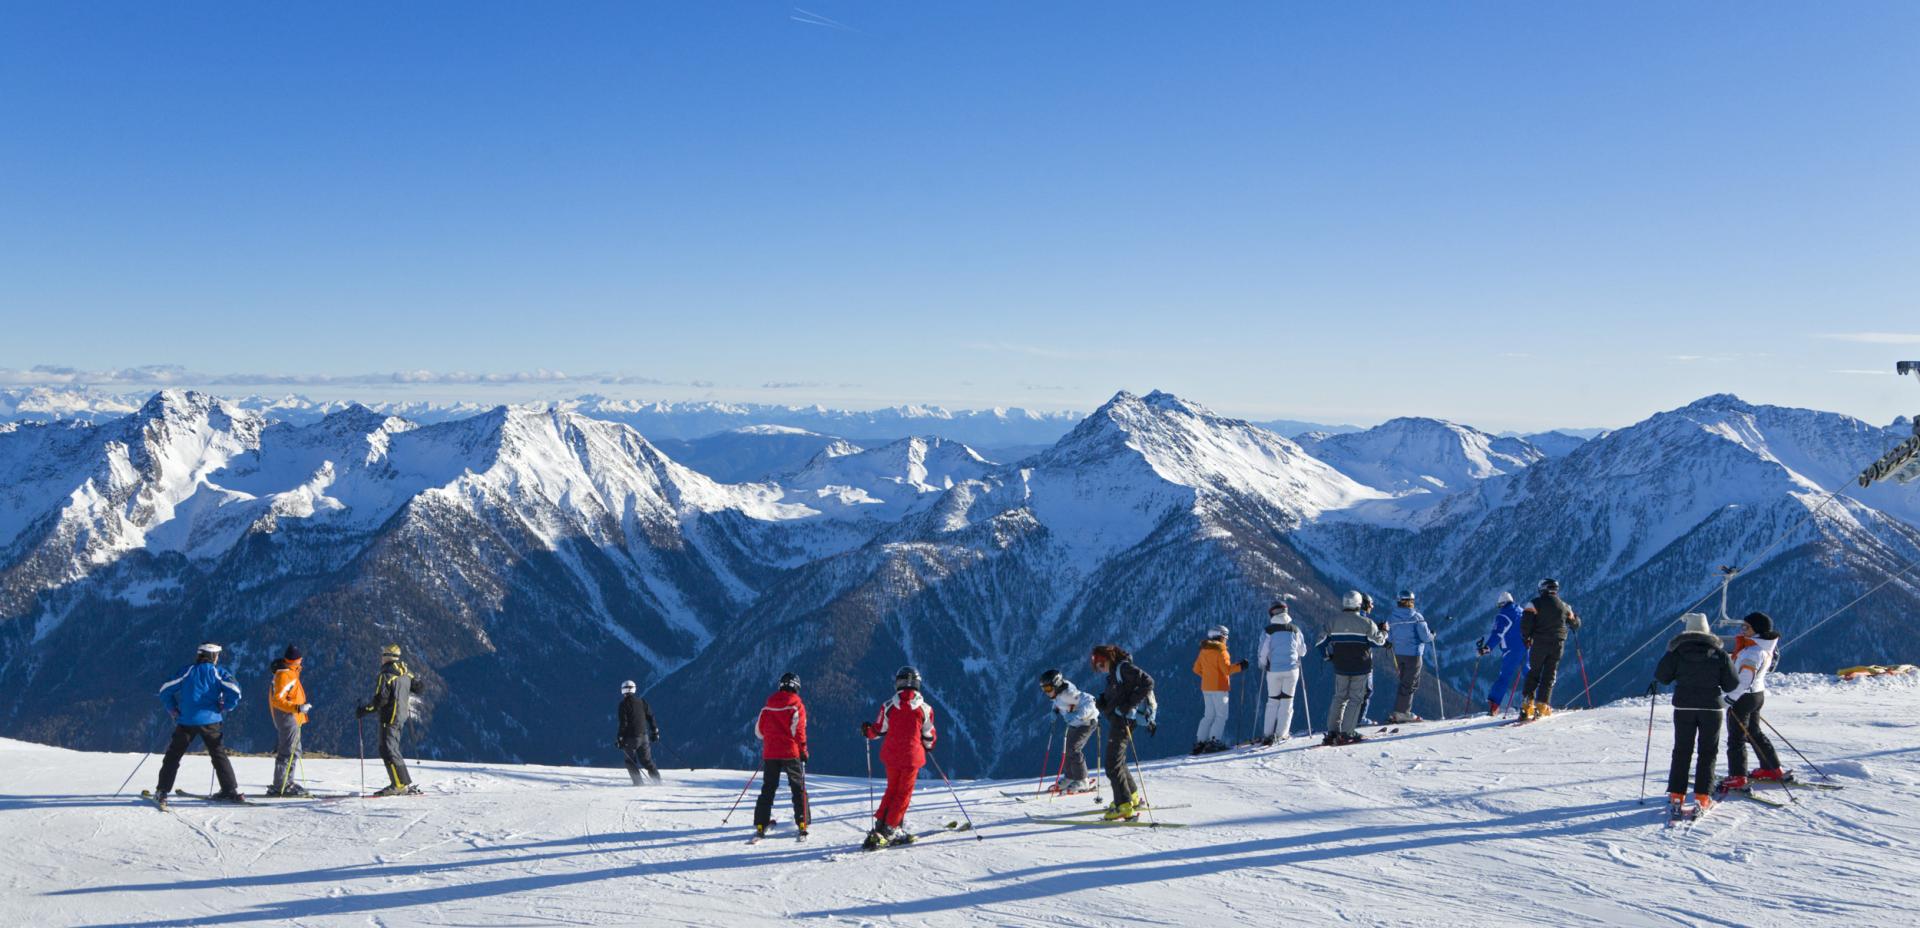 Mountain panorama of the Schwemmalm ski area